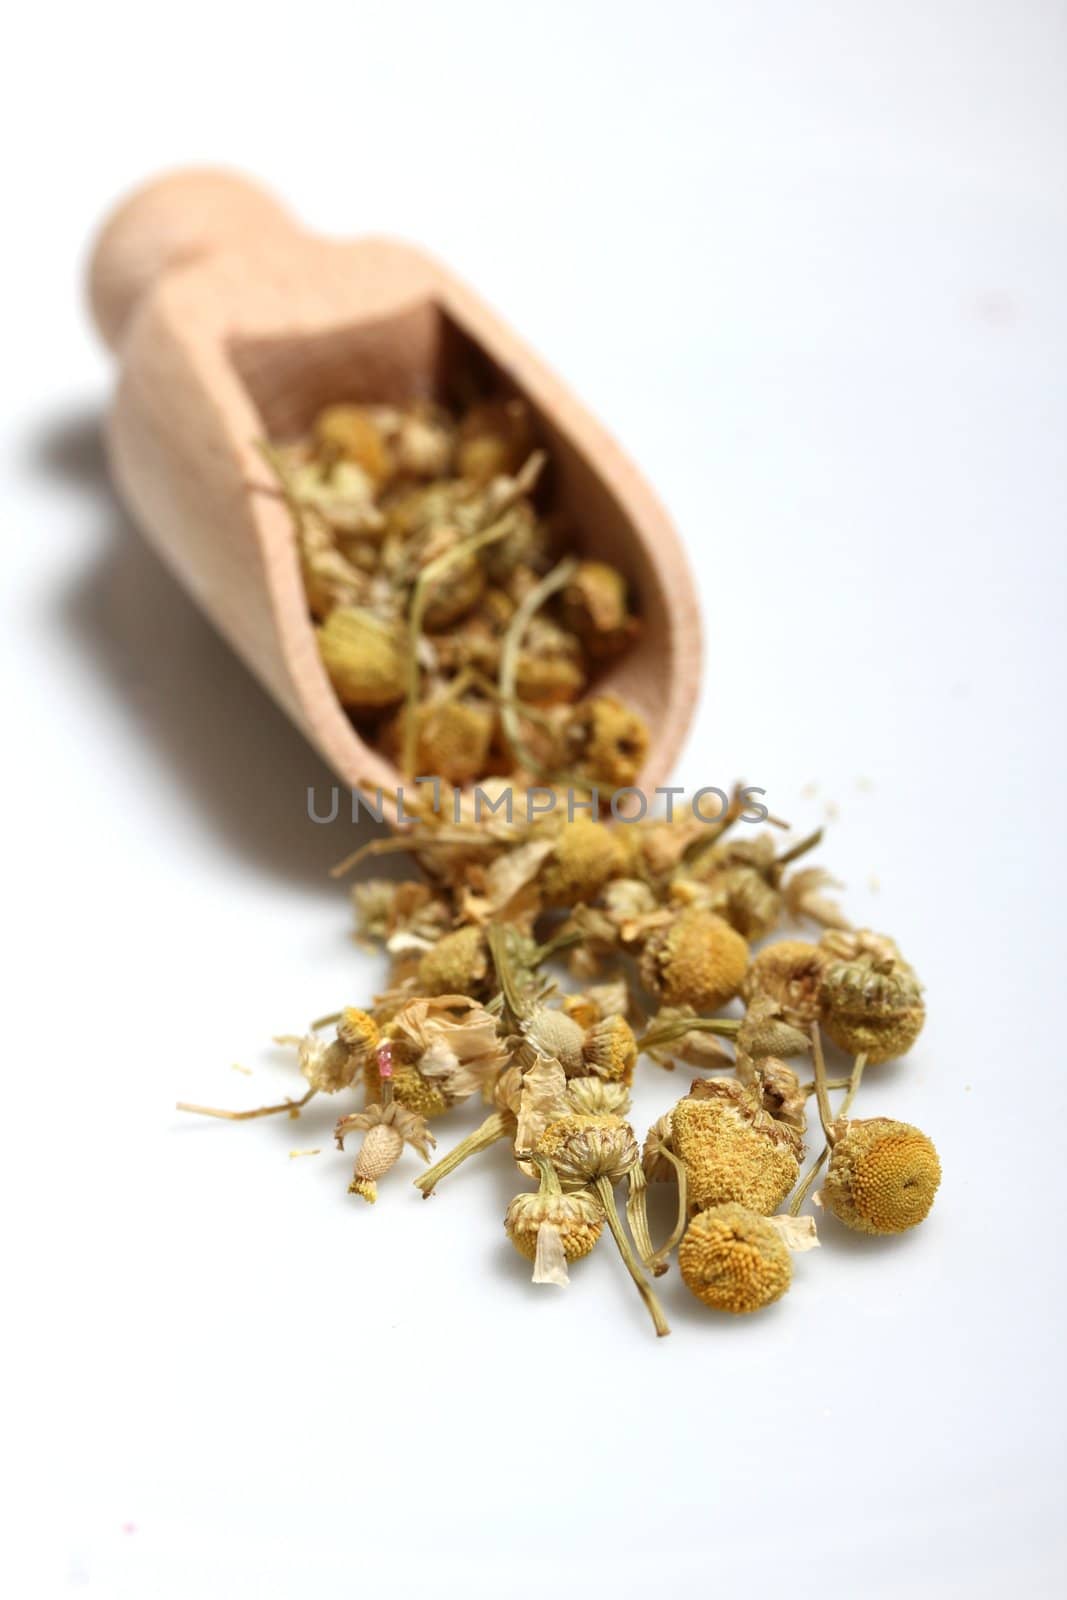 dried chamomile flowers by Teka77